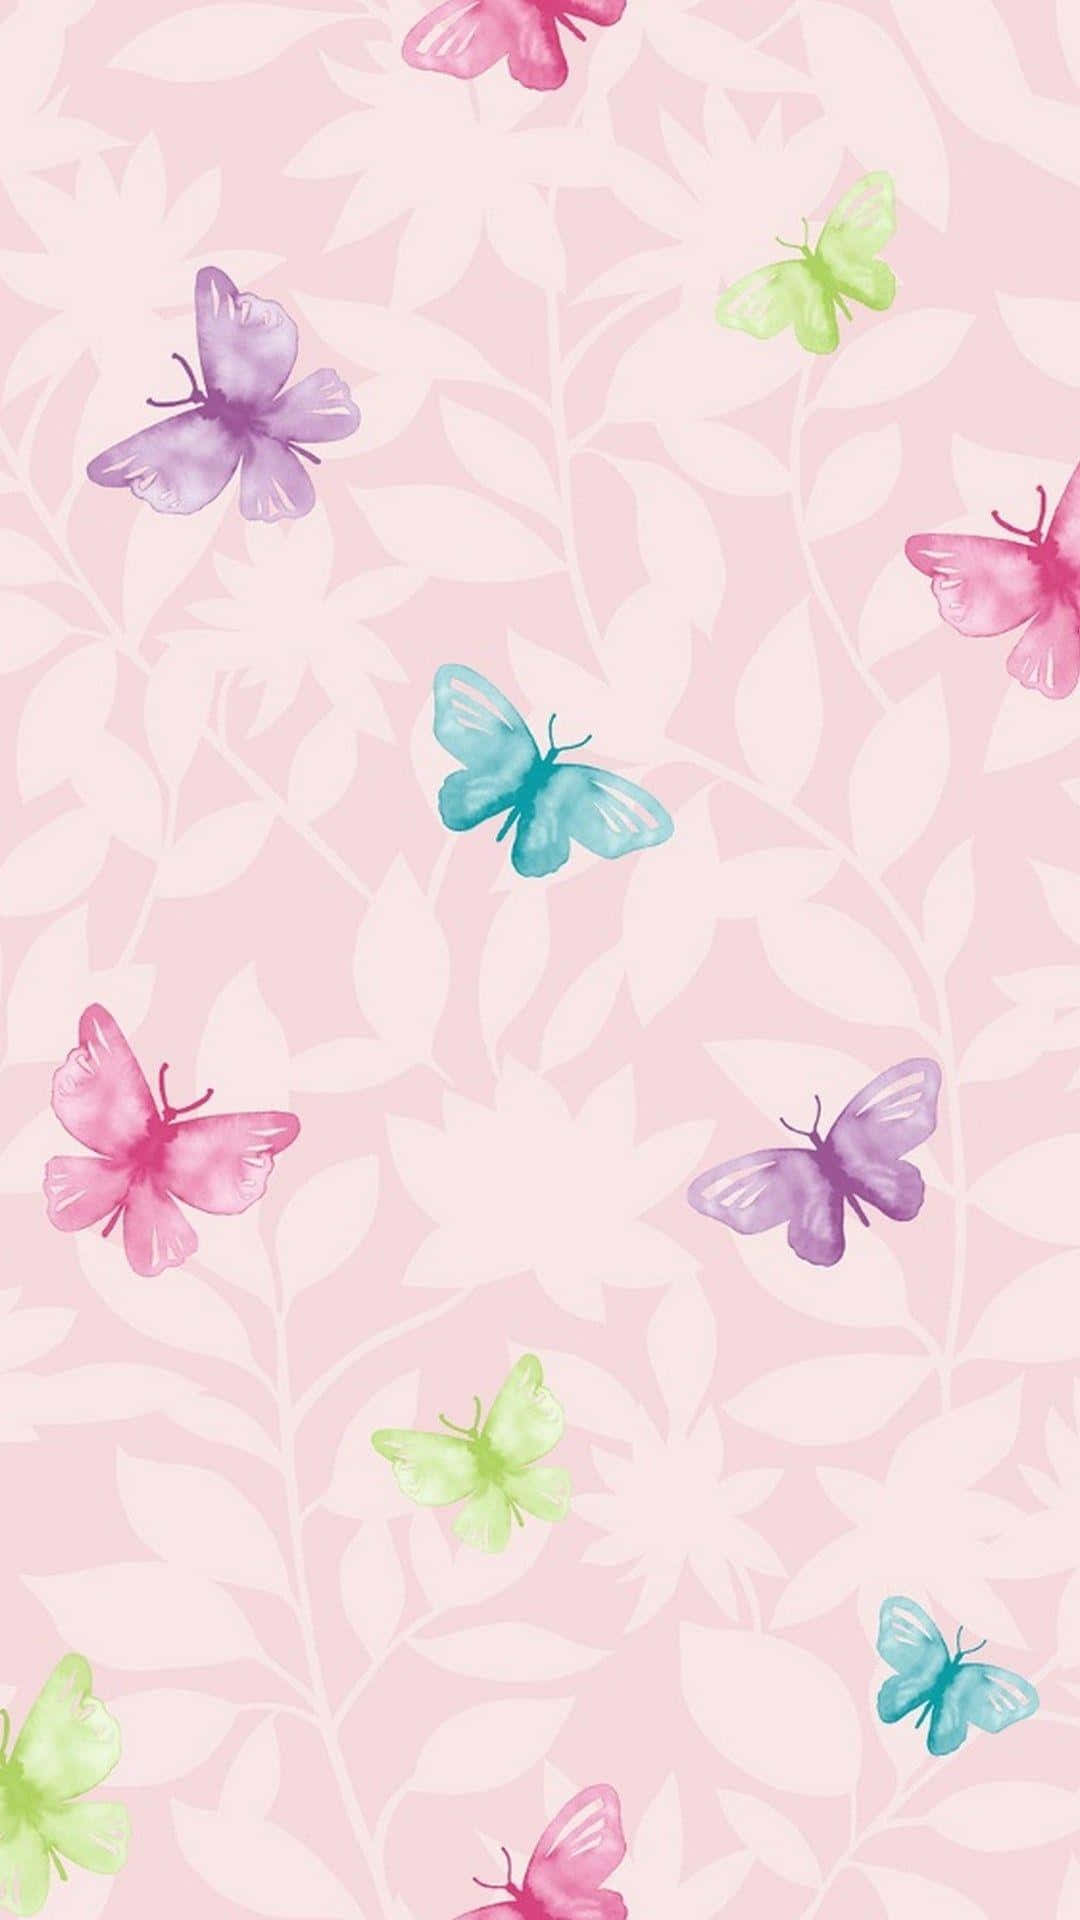 Kleiner,süßer Lila Schmetterling Wallpaper